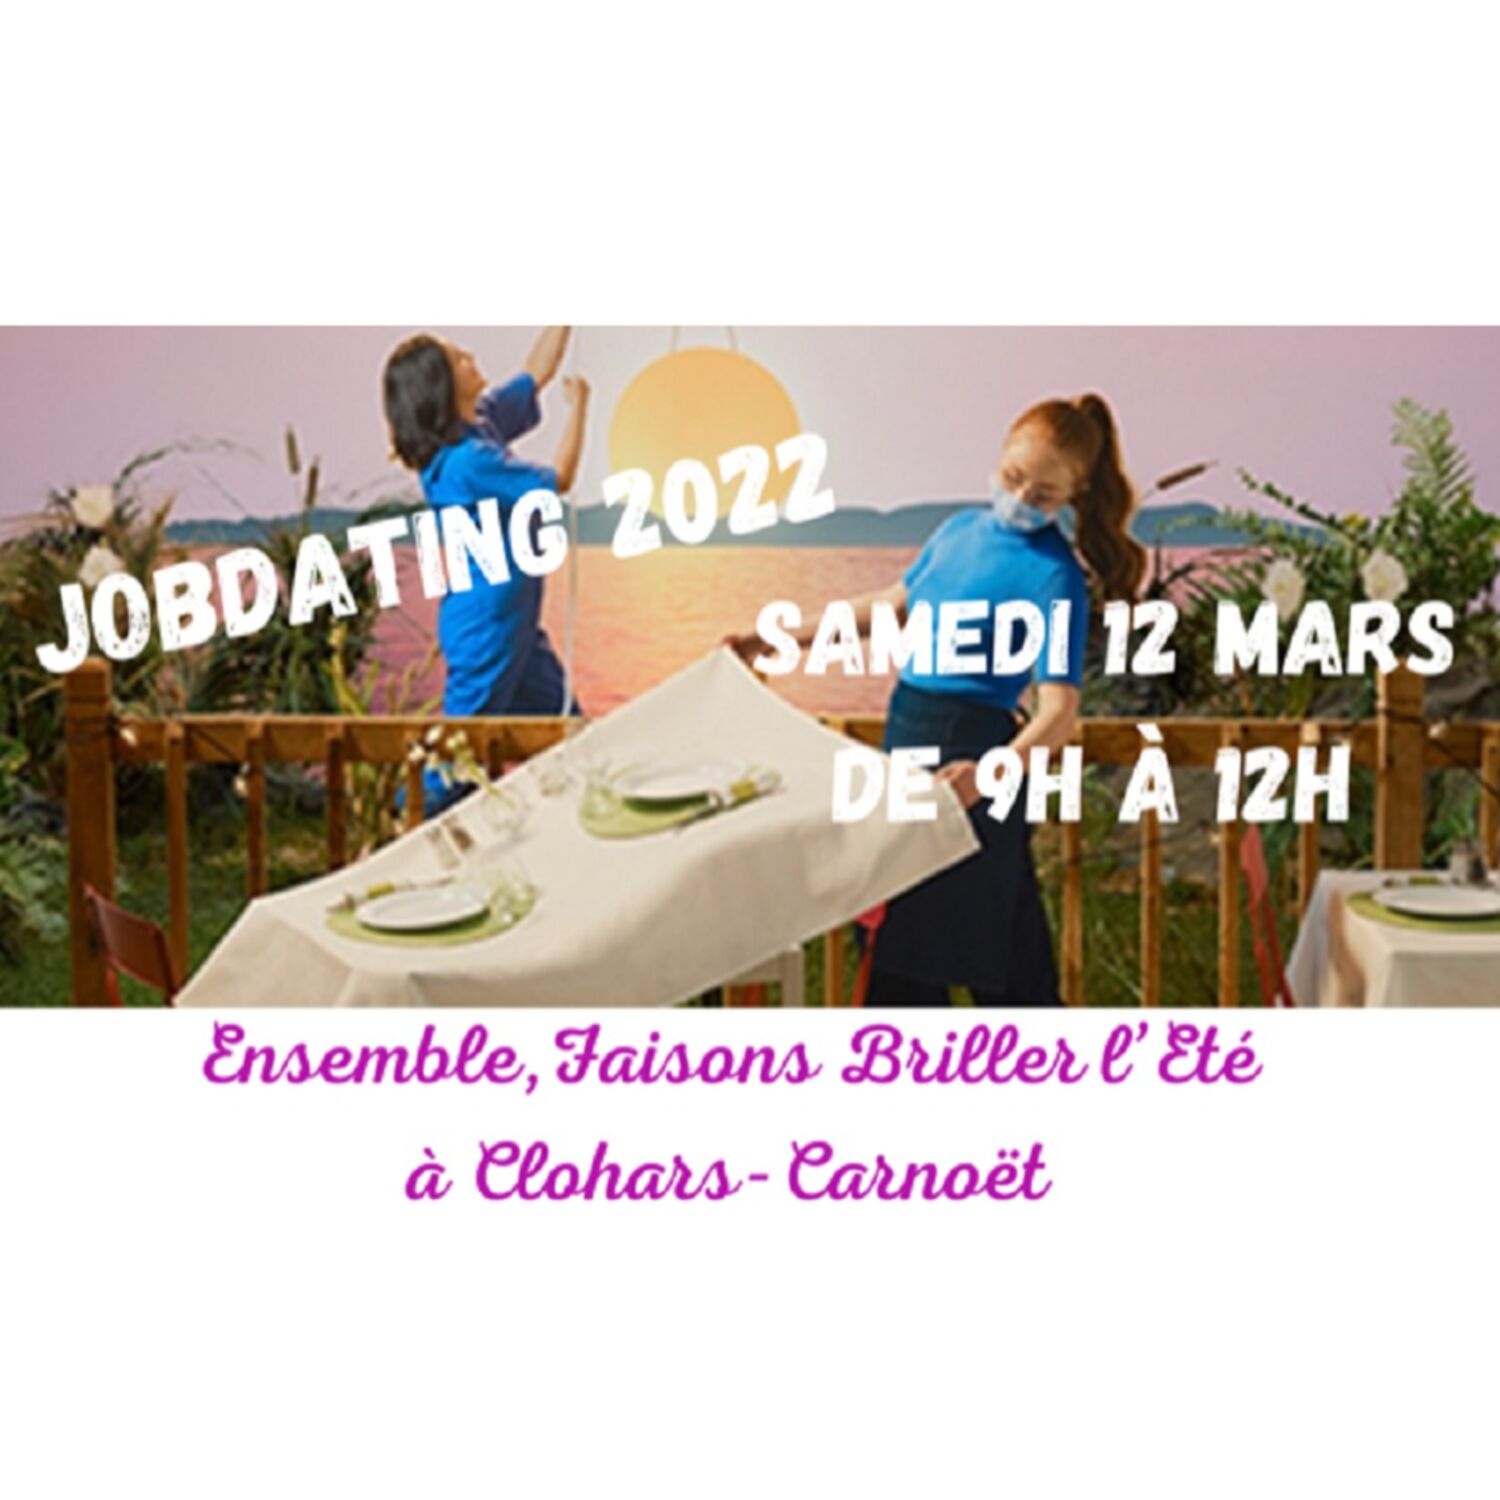 Job dating à Clohars Carnoët le 12 mars